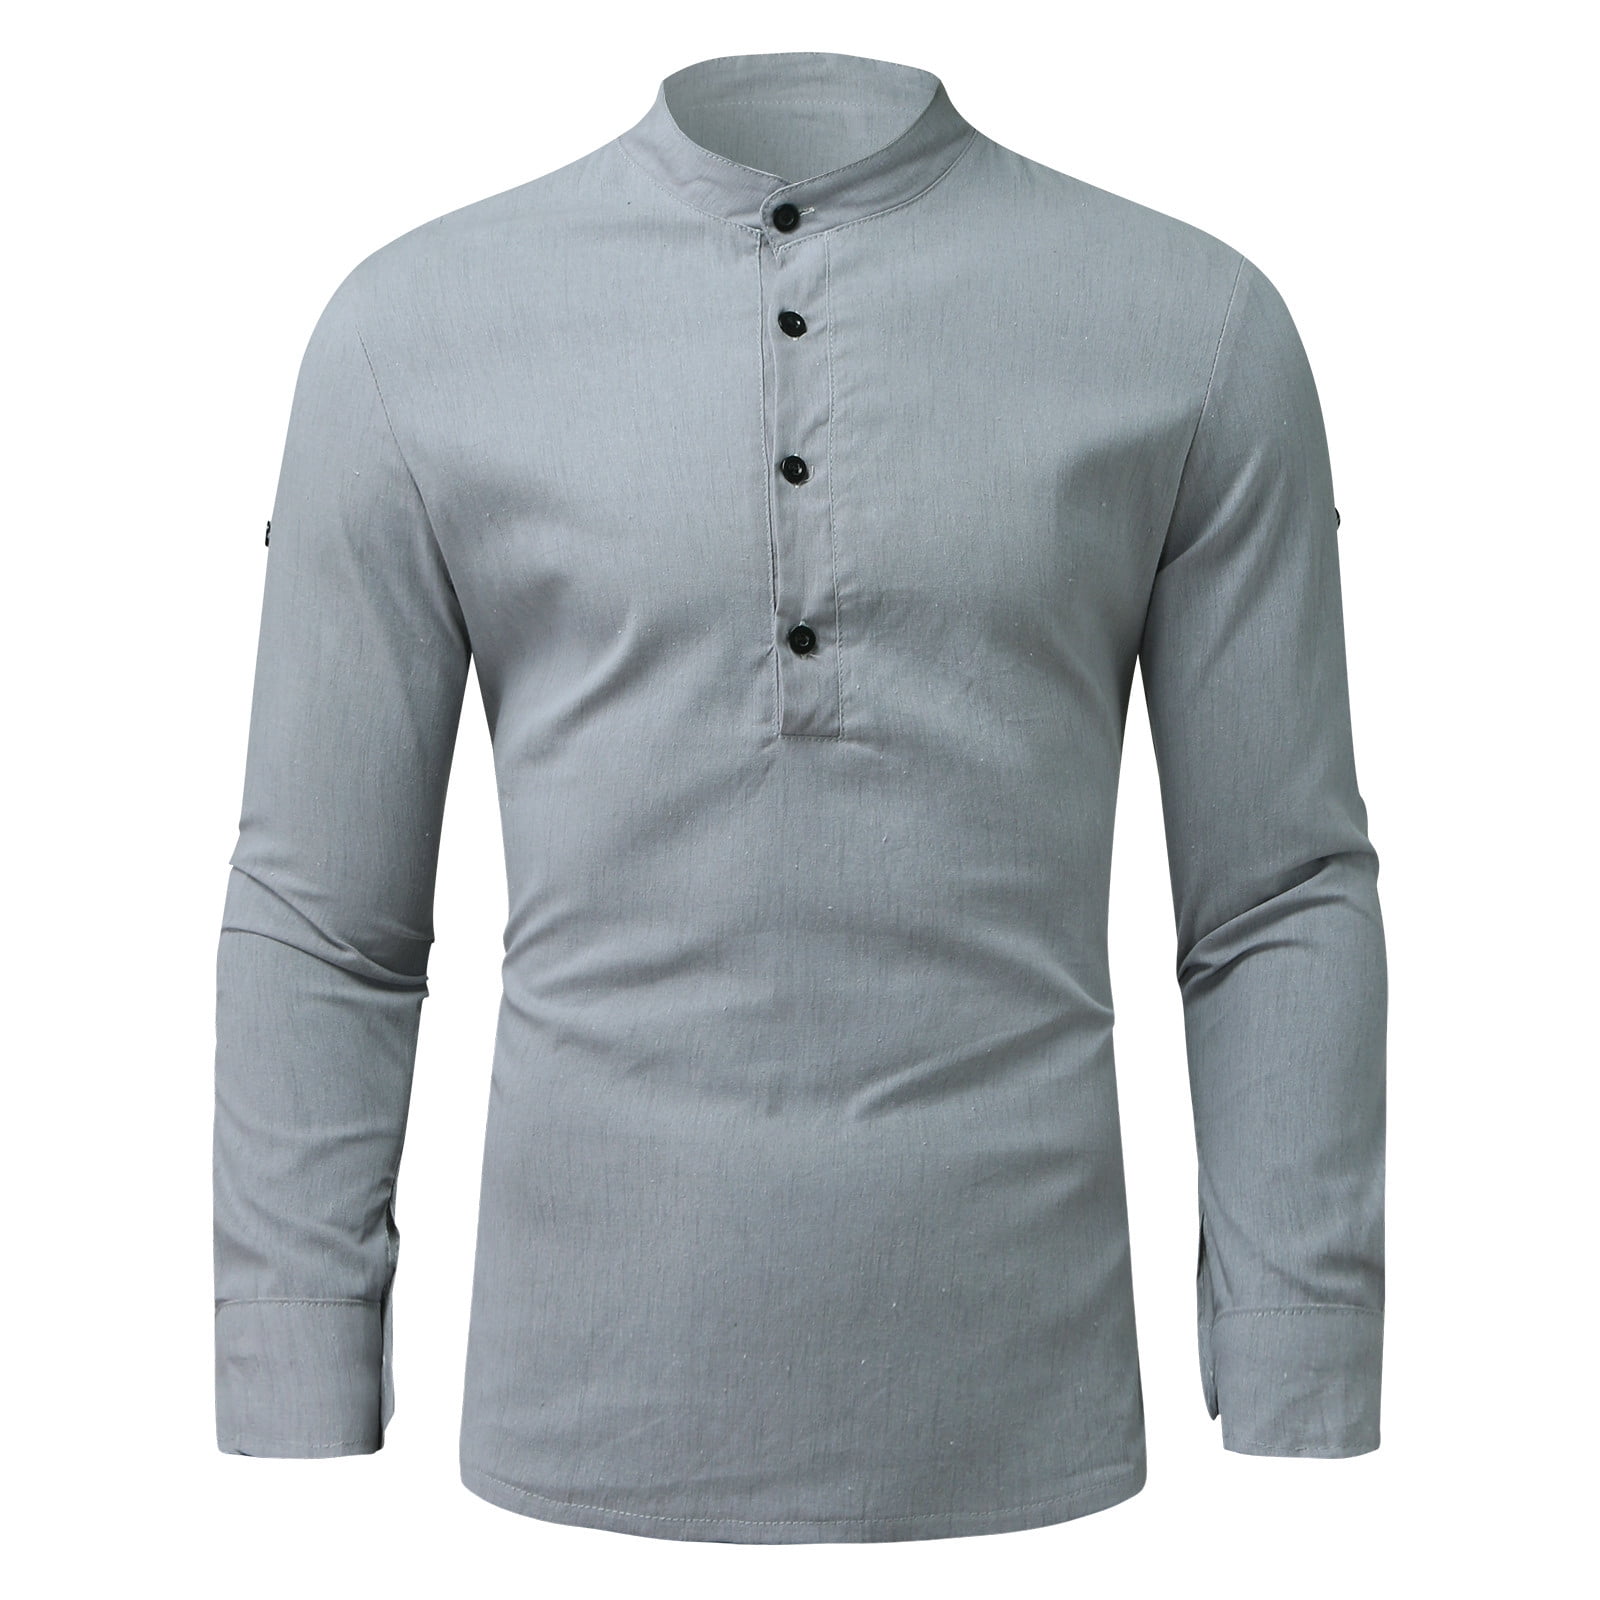 VSSSJ Men's Cotton and Linen Shirt Oversized Fit Solid Color